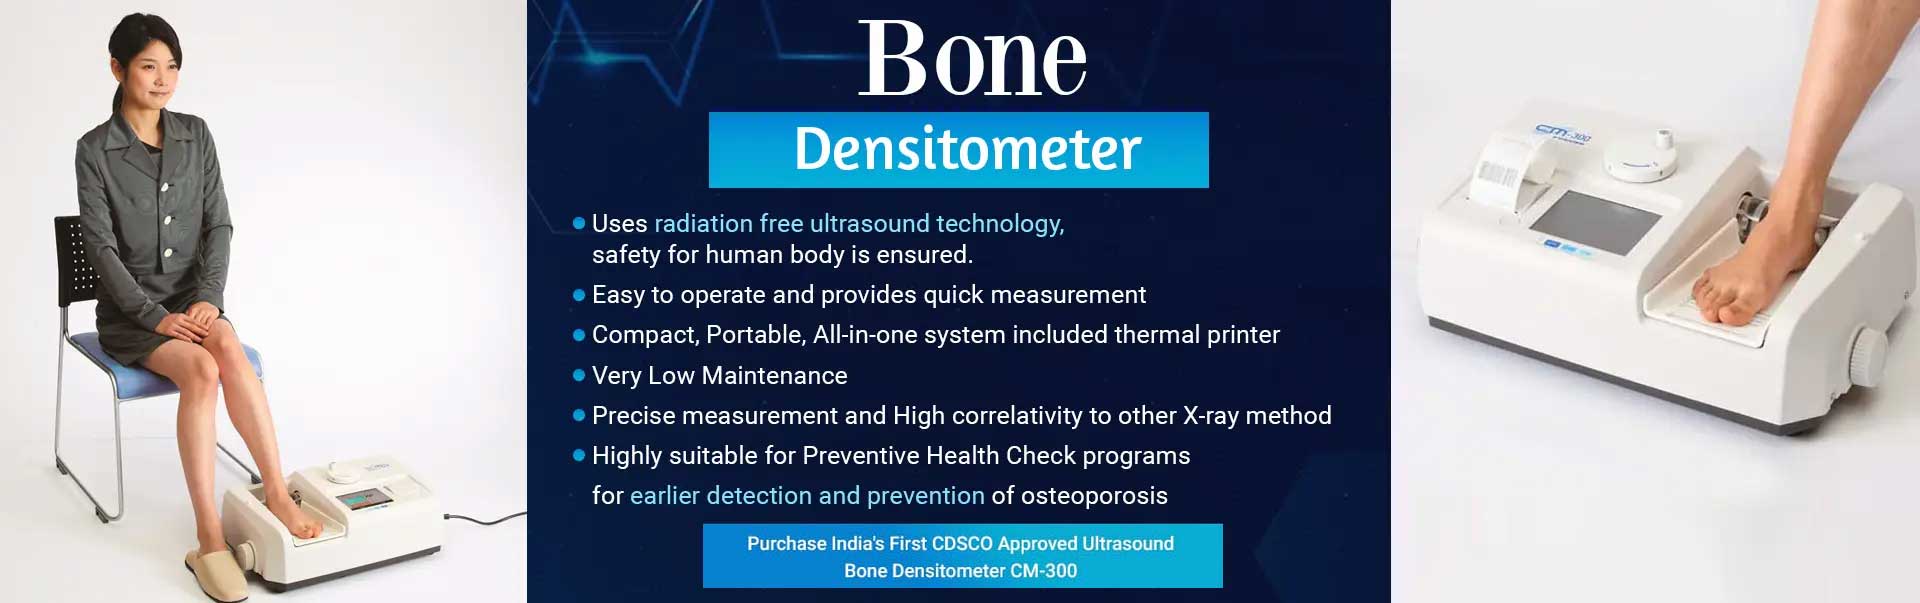 Bone Densitometer Manufacturers in Jamnagar